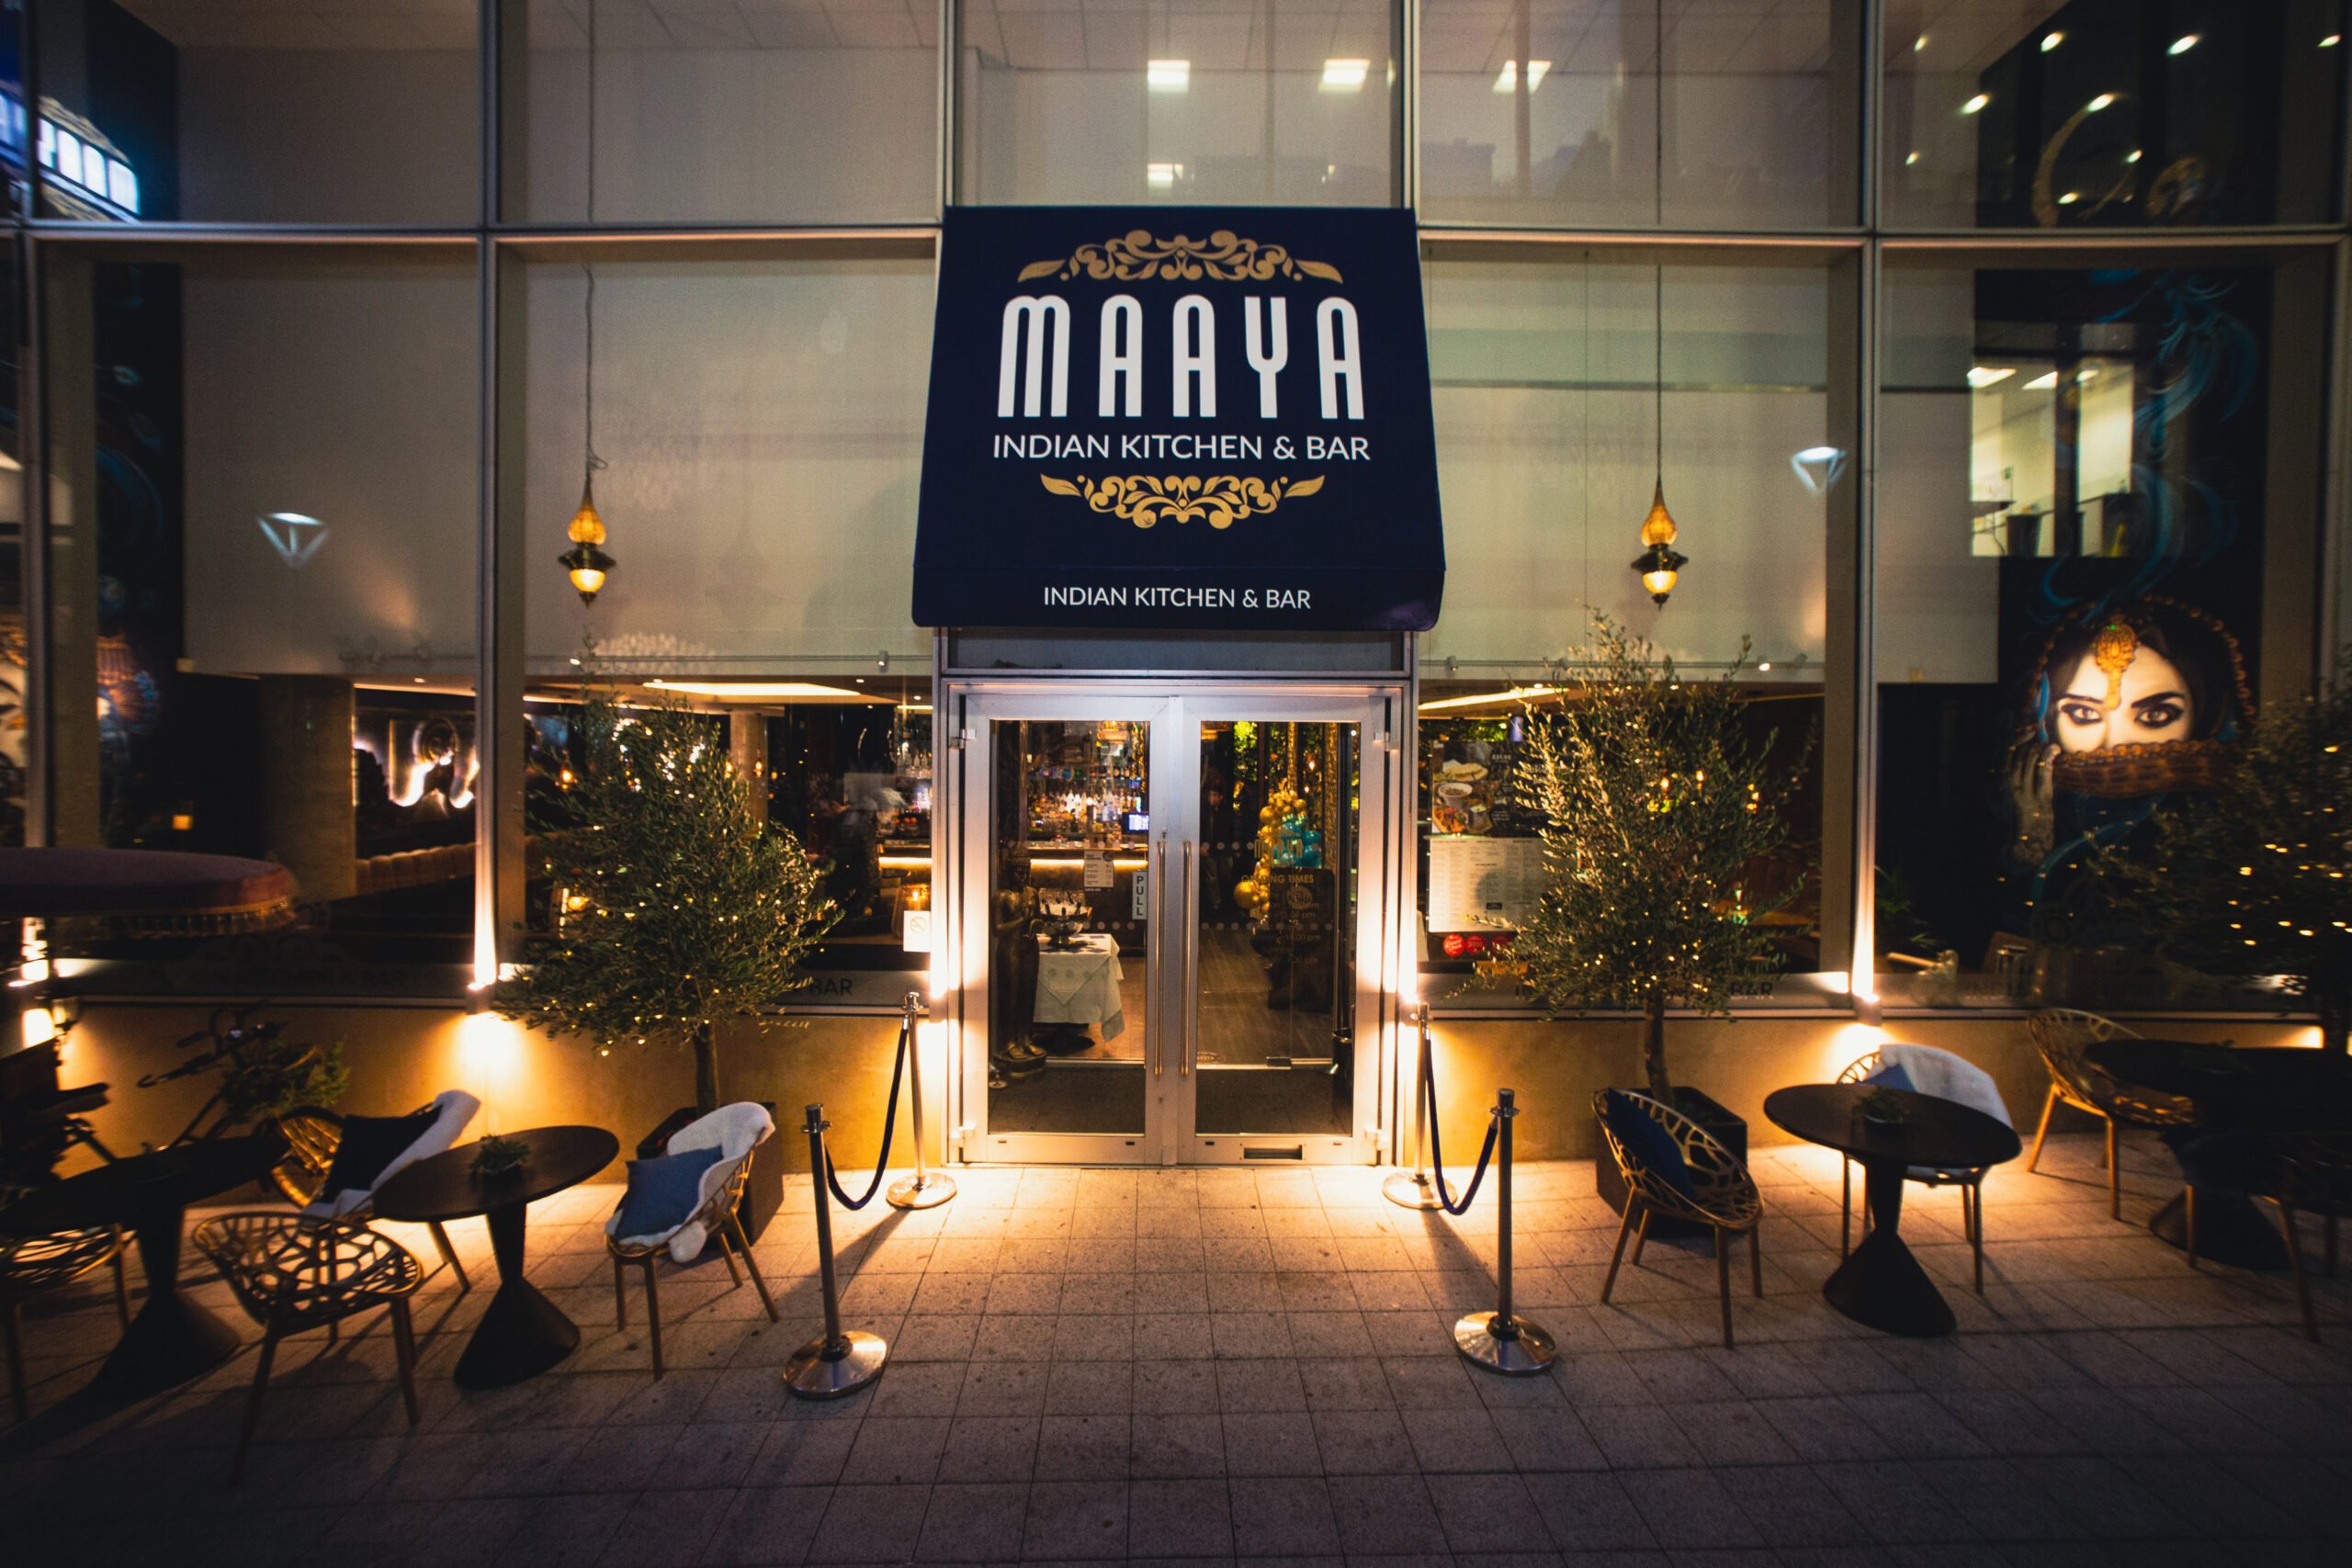 Maaya Indian Kitchen & Bar are finalists yet again